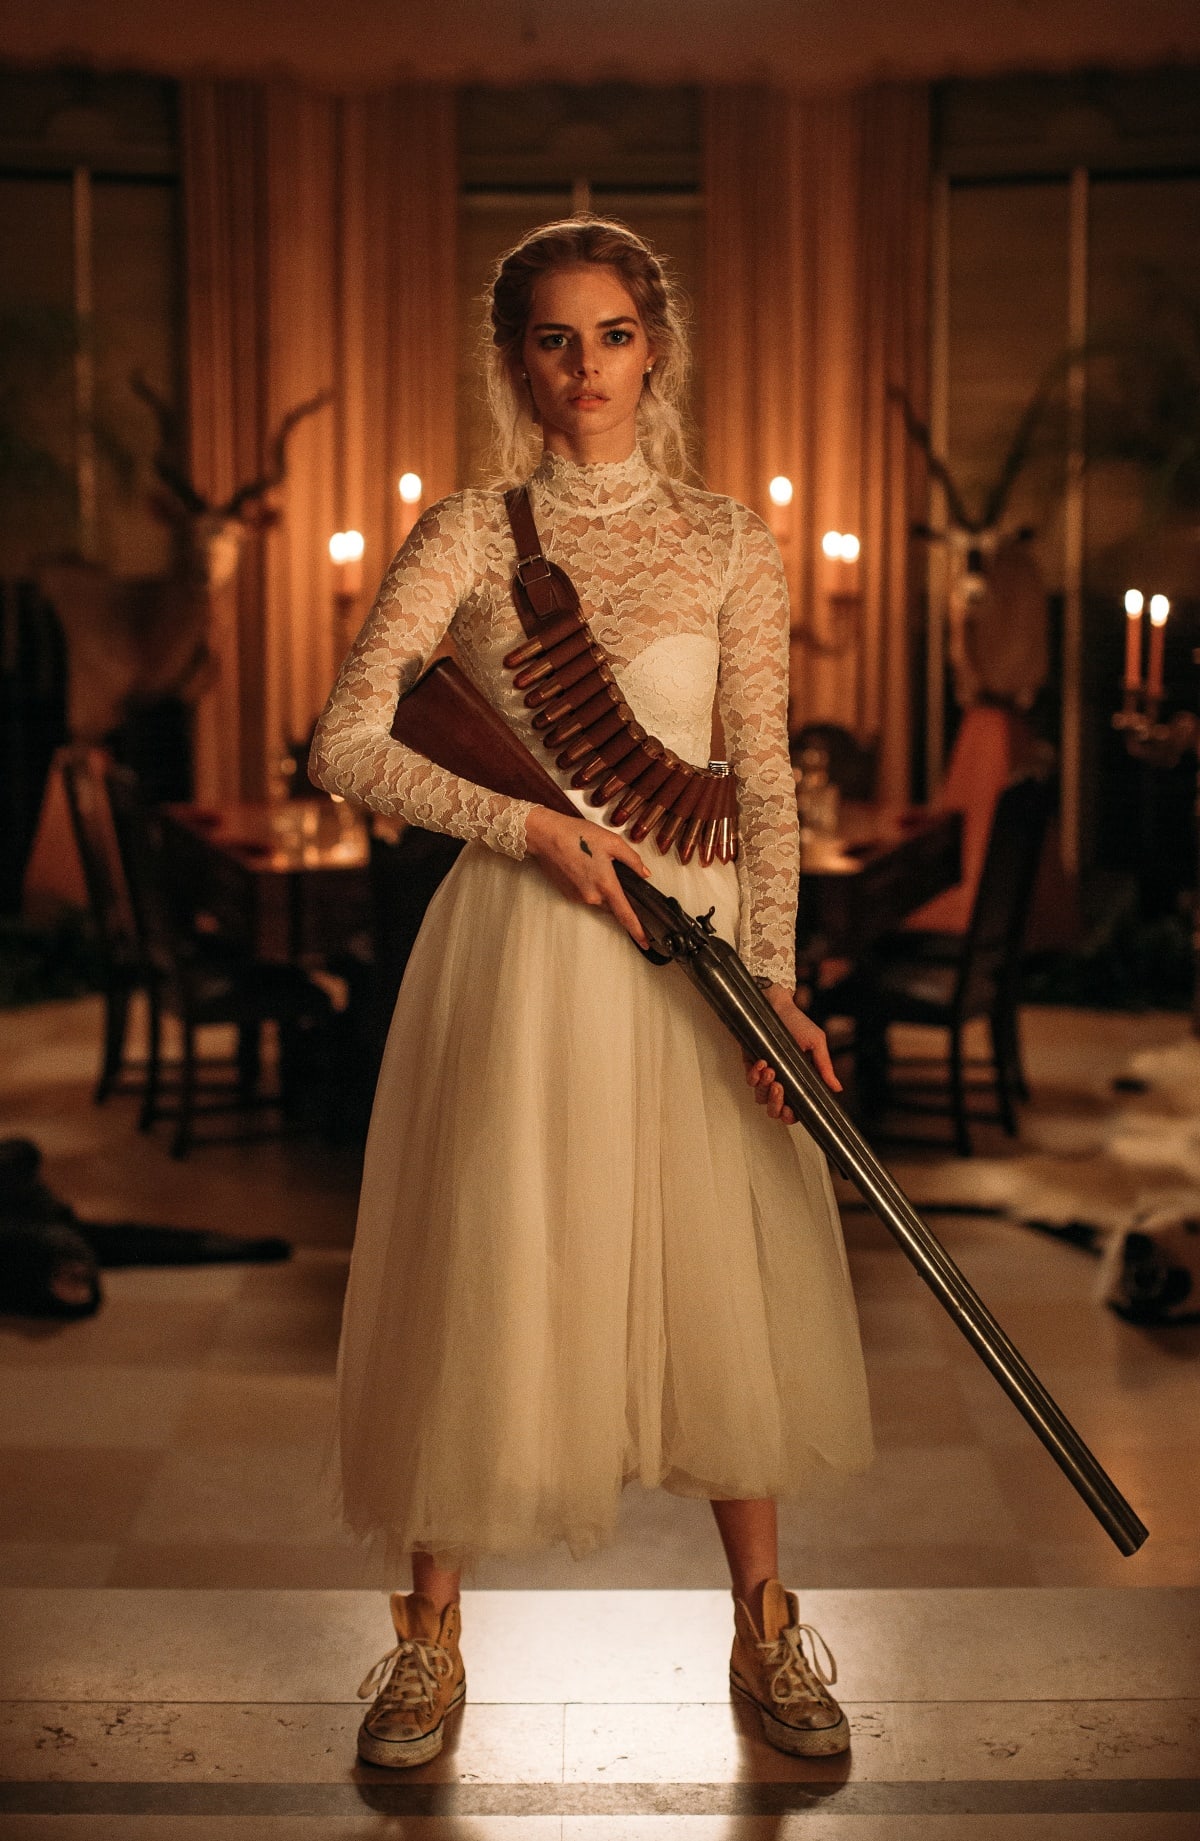 Samara Weaving as Grace Le Domas in the 2019 black comedy horror film Ready or Not